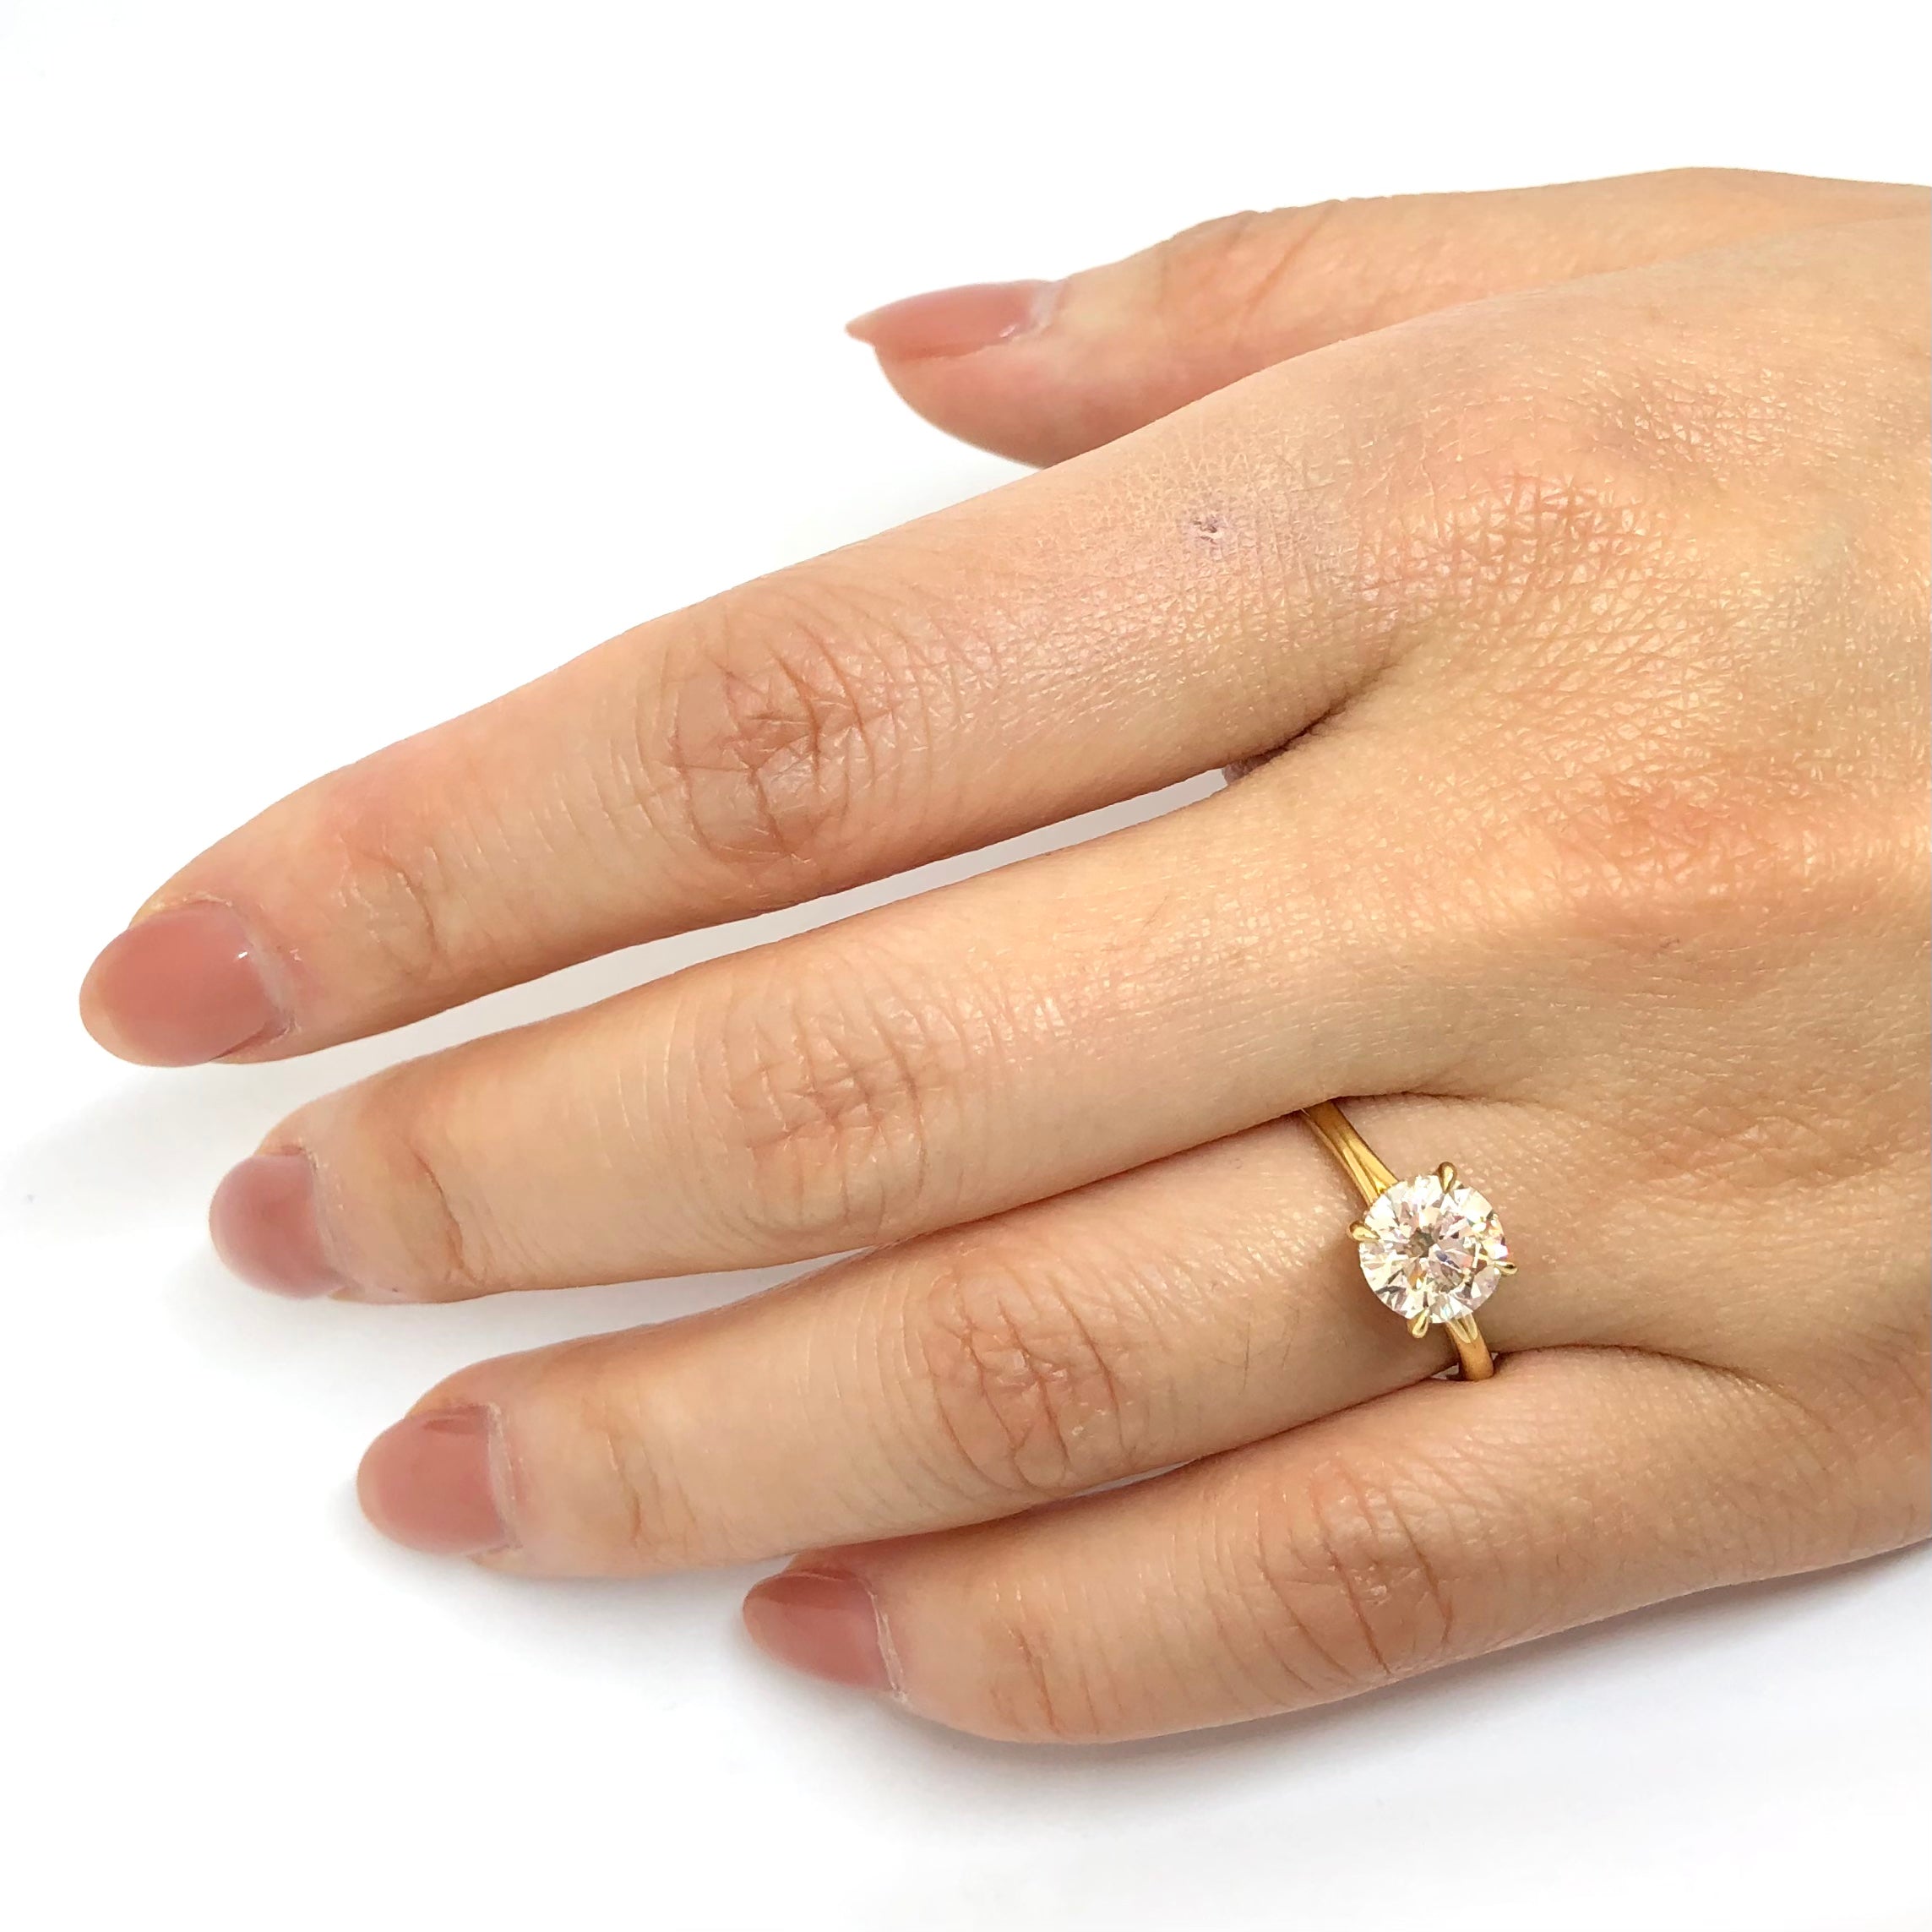 De Beers Forevermark Hidden Halo Solitaire Diamond Engagement Ring